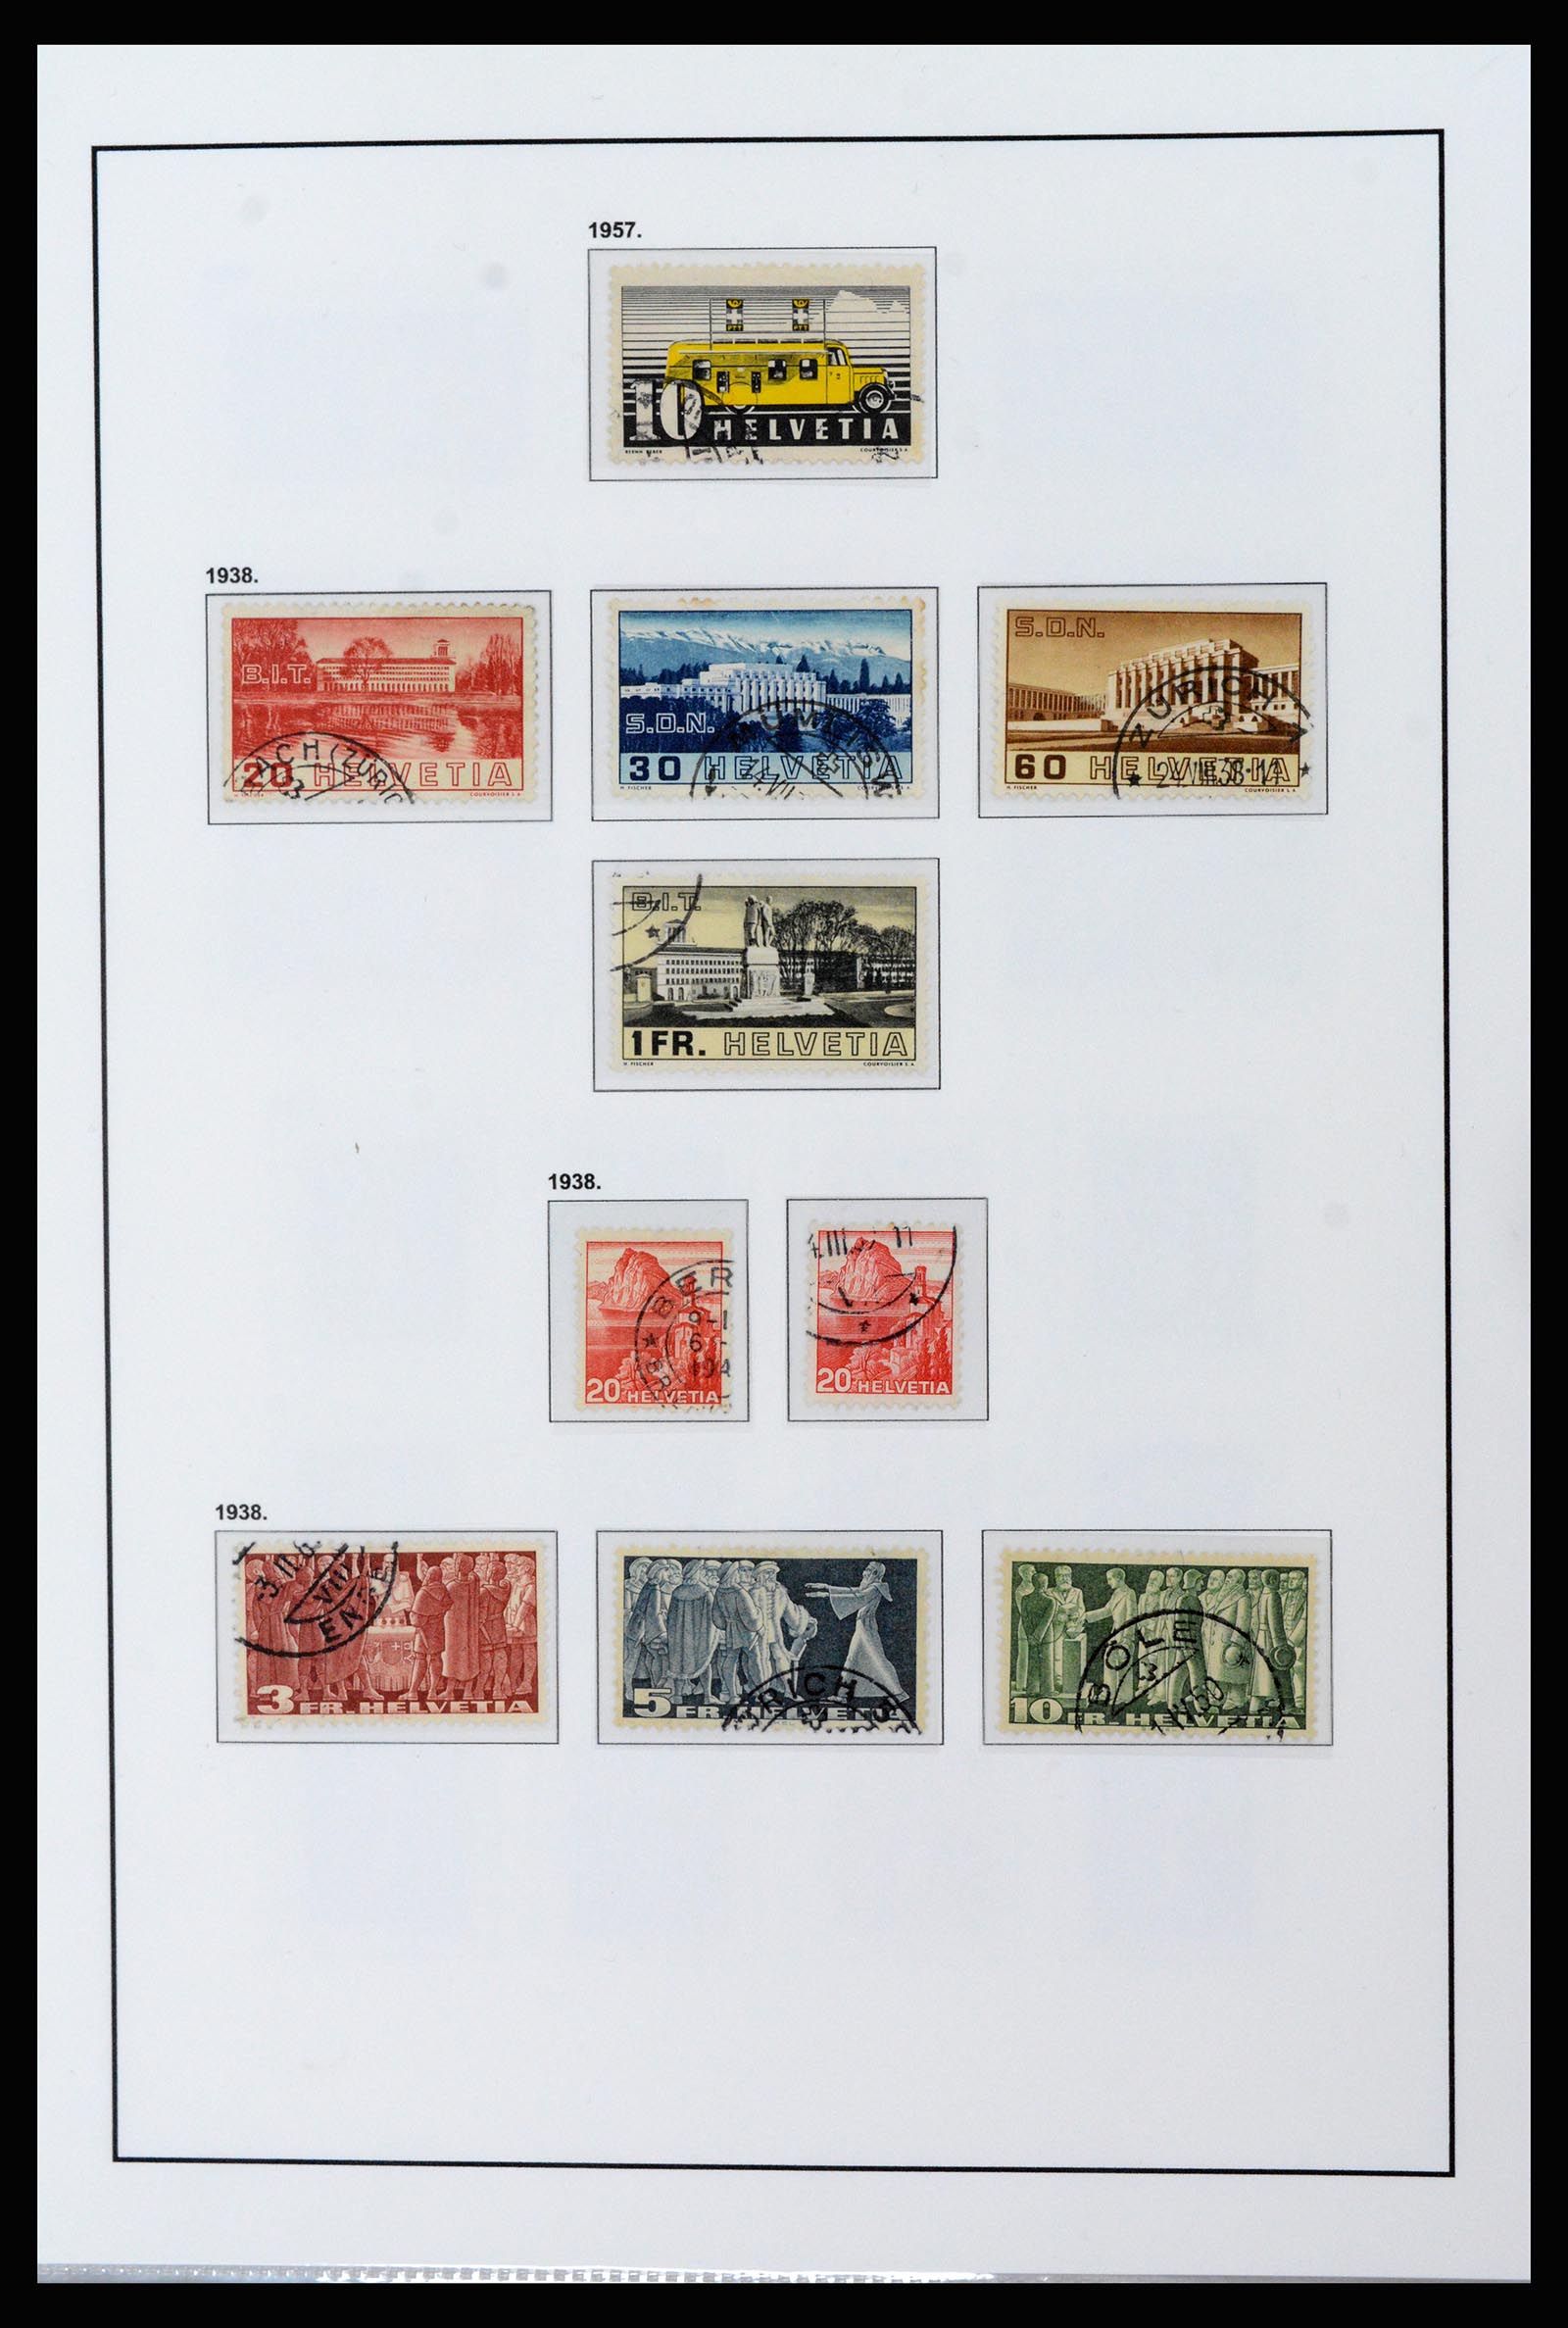 37225 011 - Stamp collection 37225 Switzerland 1854-2020.